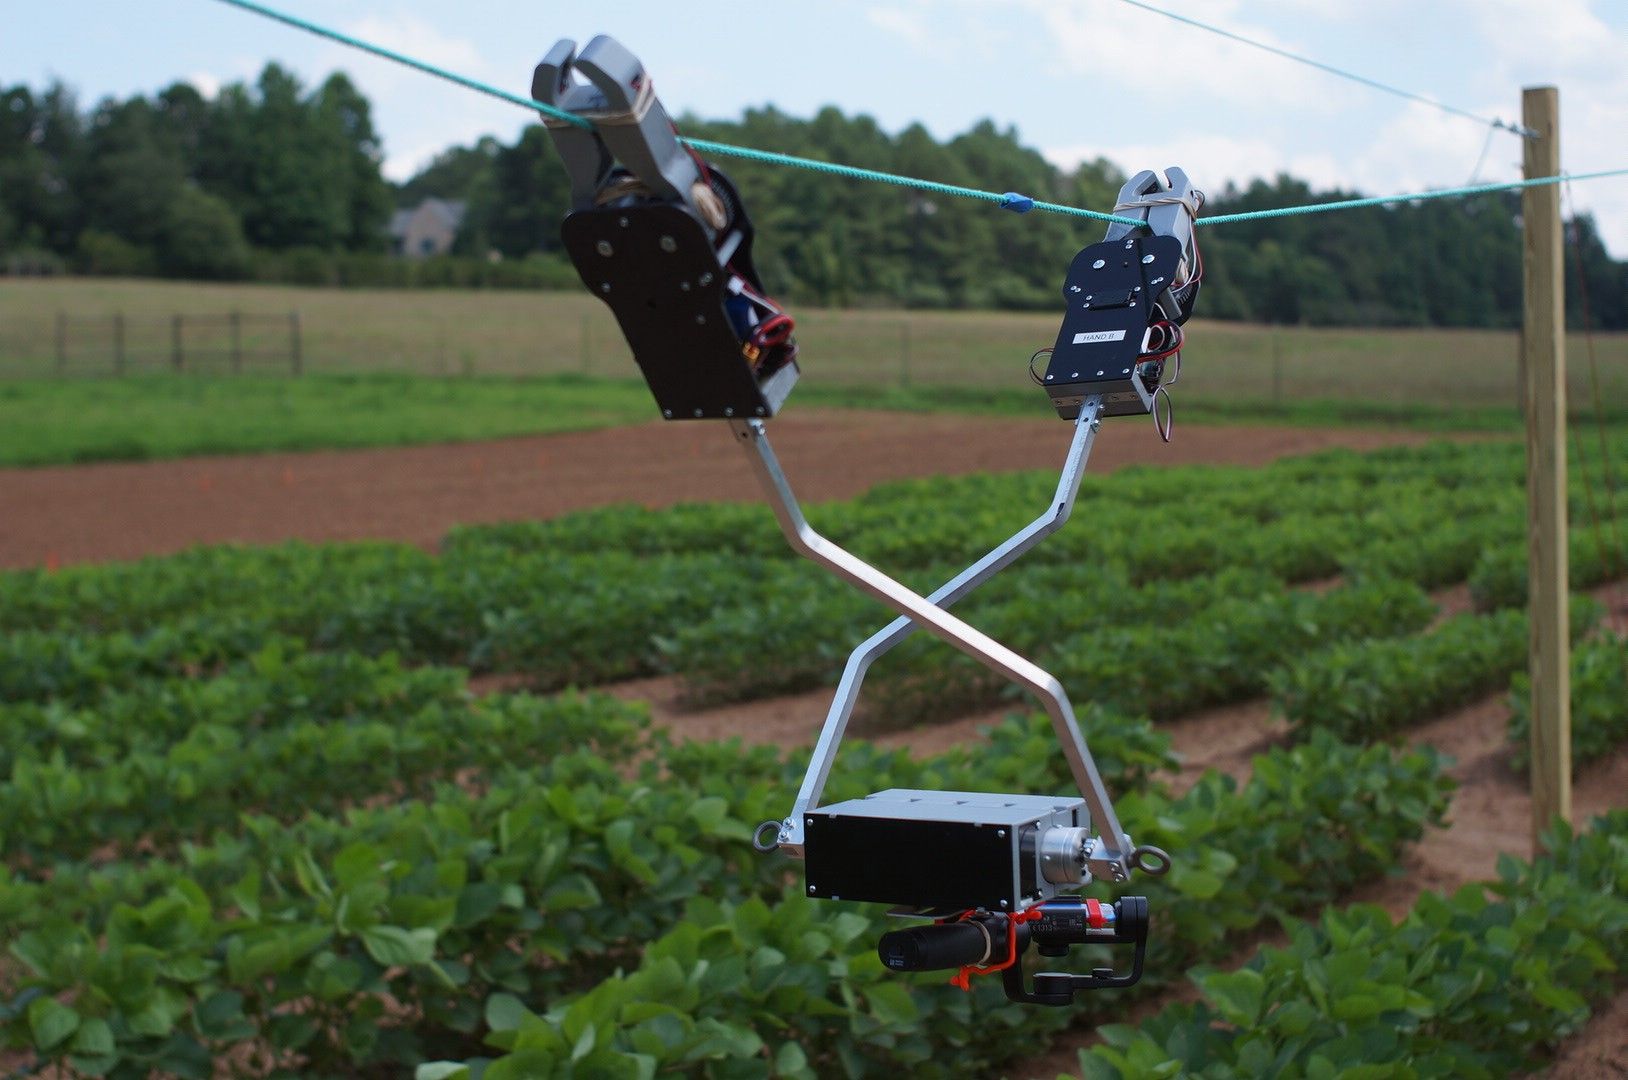 Tarzan-robot-field: The Tarzan robot being tested in a soybean field near Athens, GA.